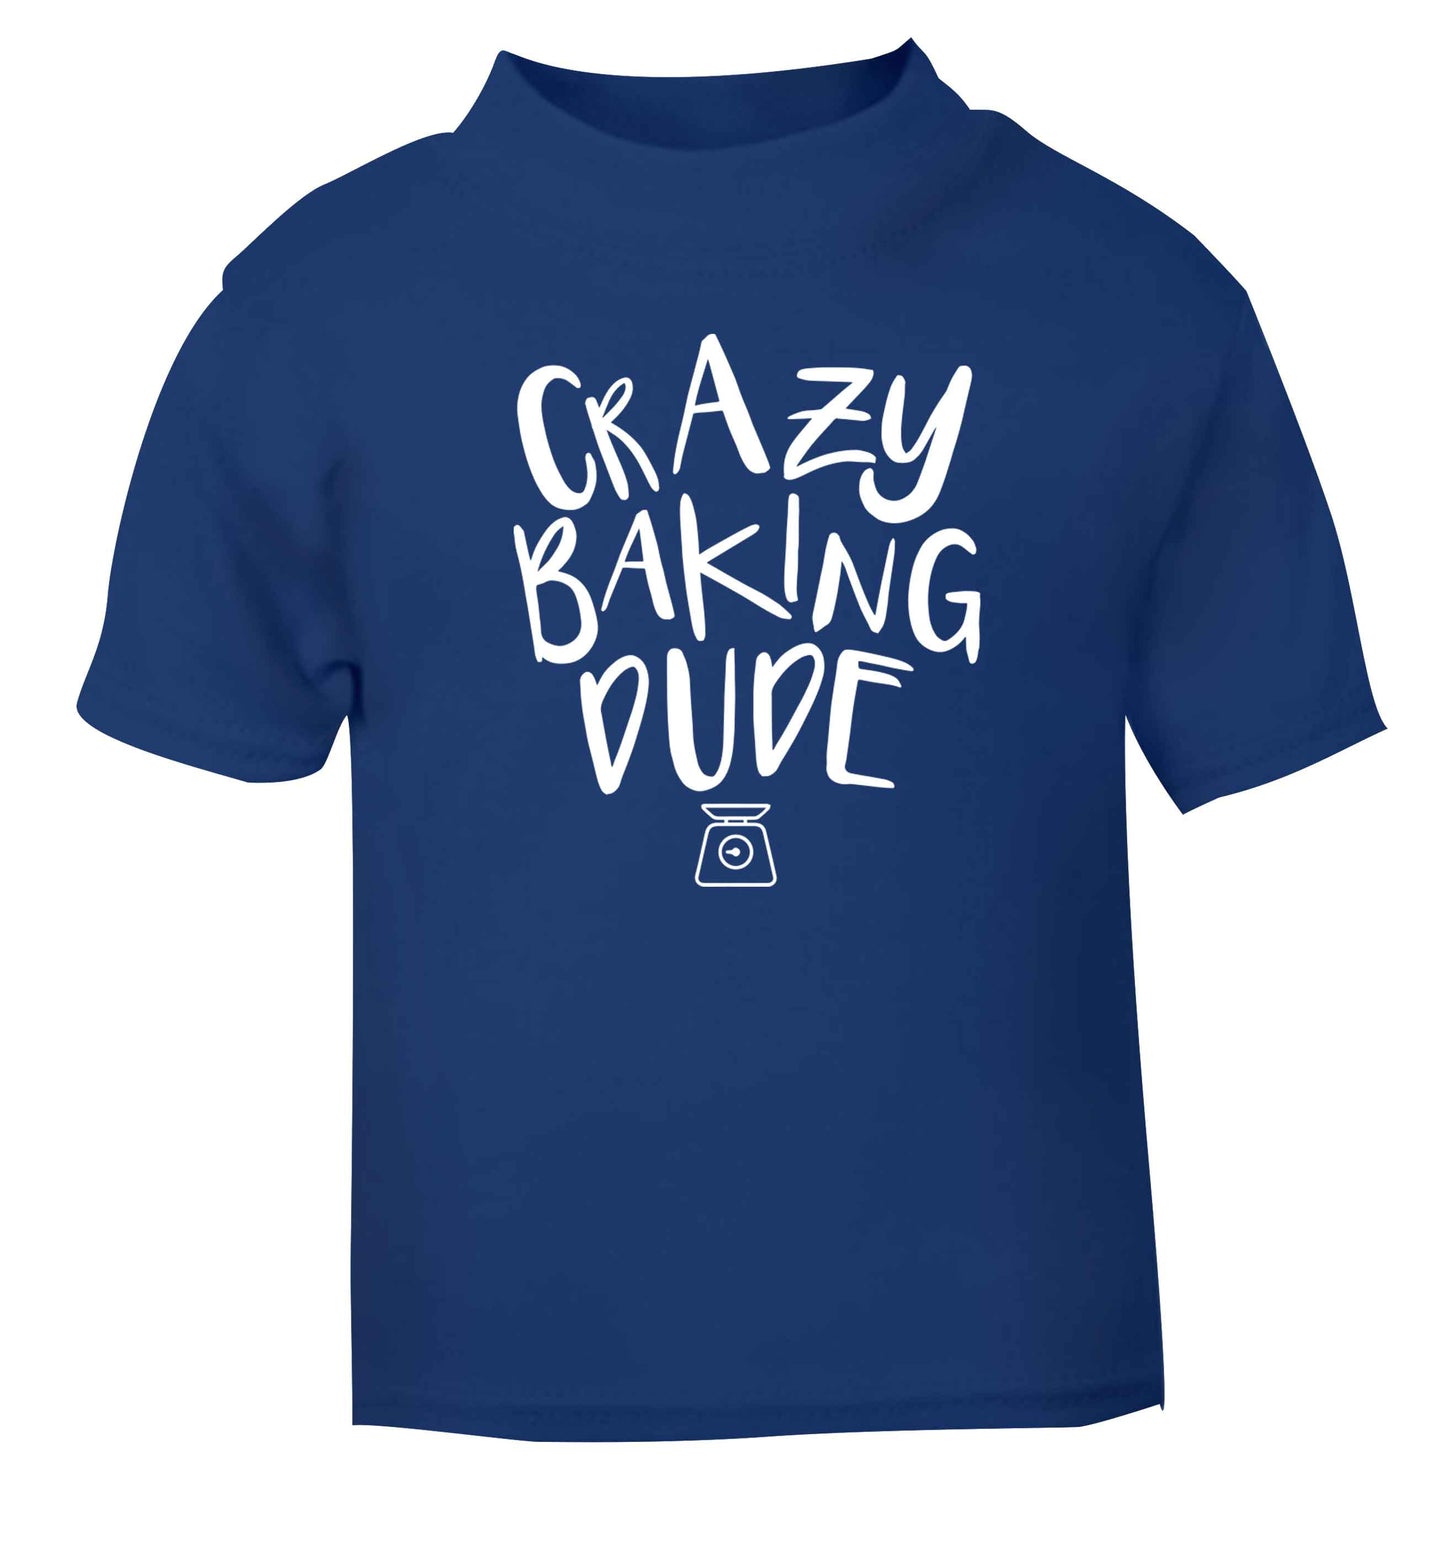 Crazy baking dude blue Baby Toddler Tshirt 2 Years